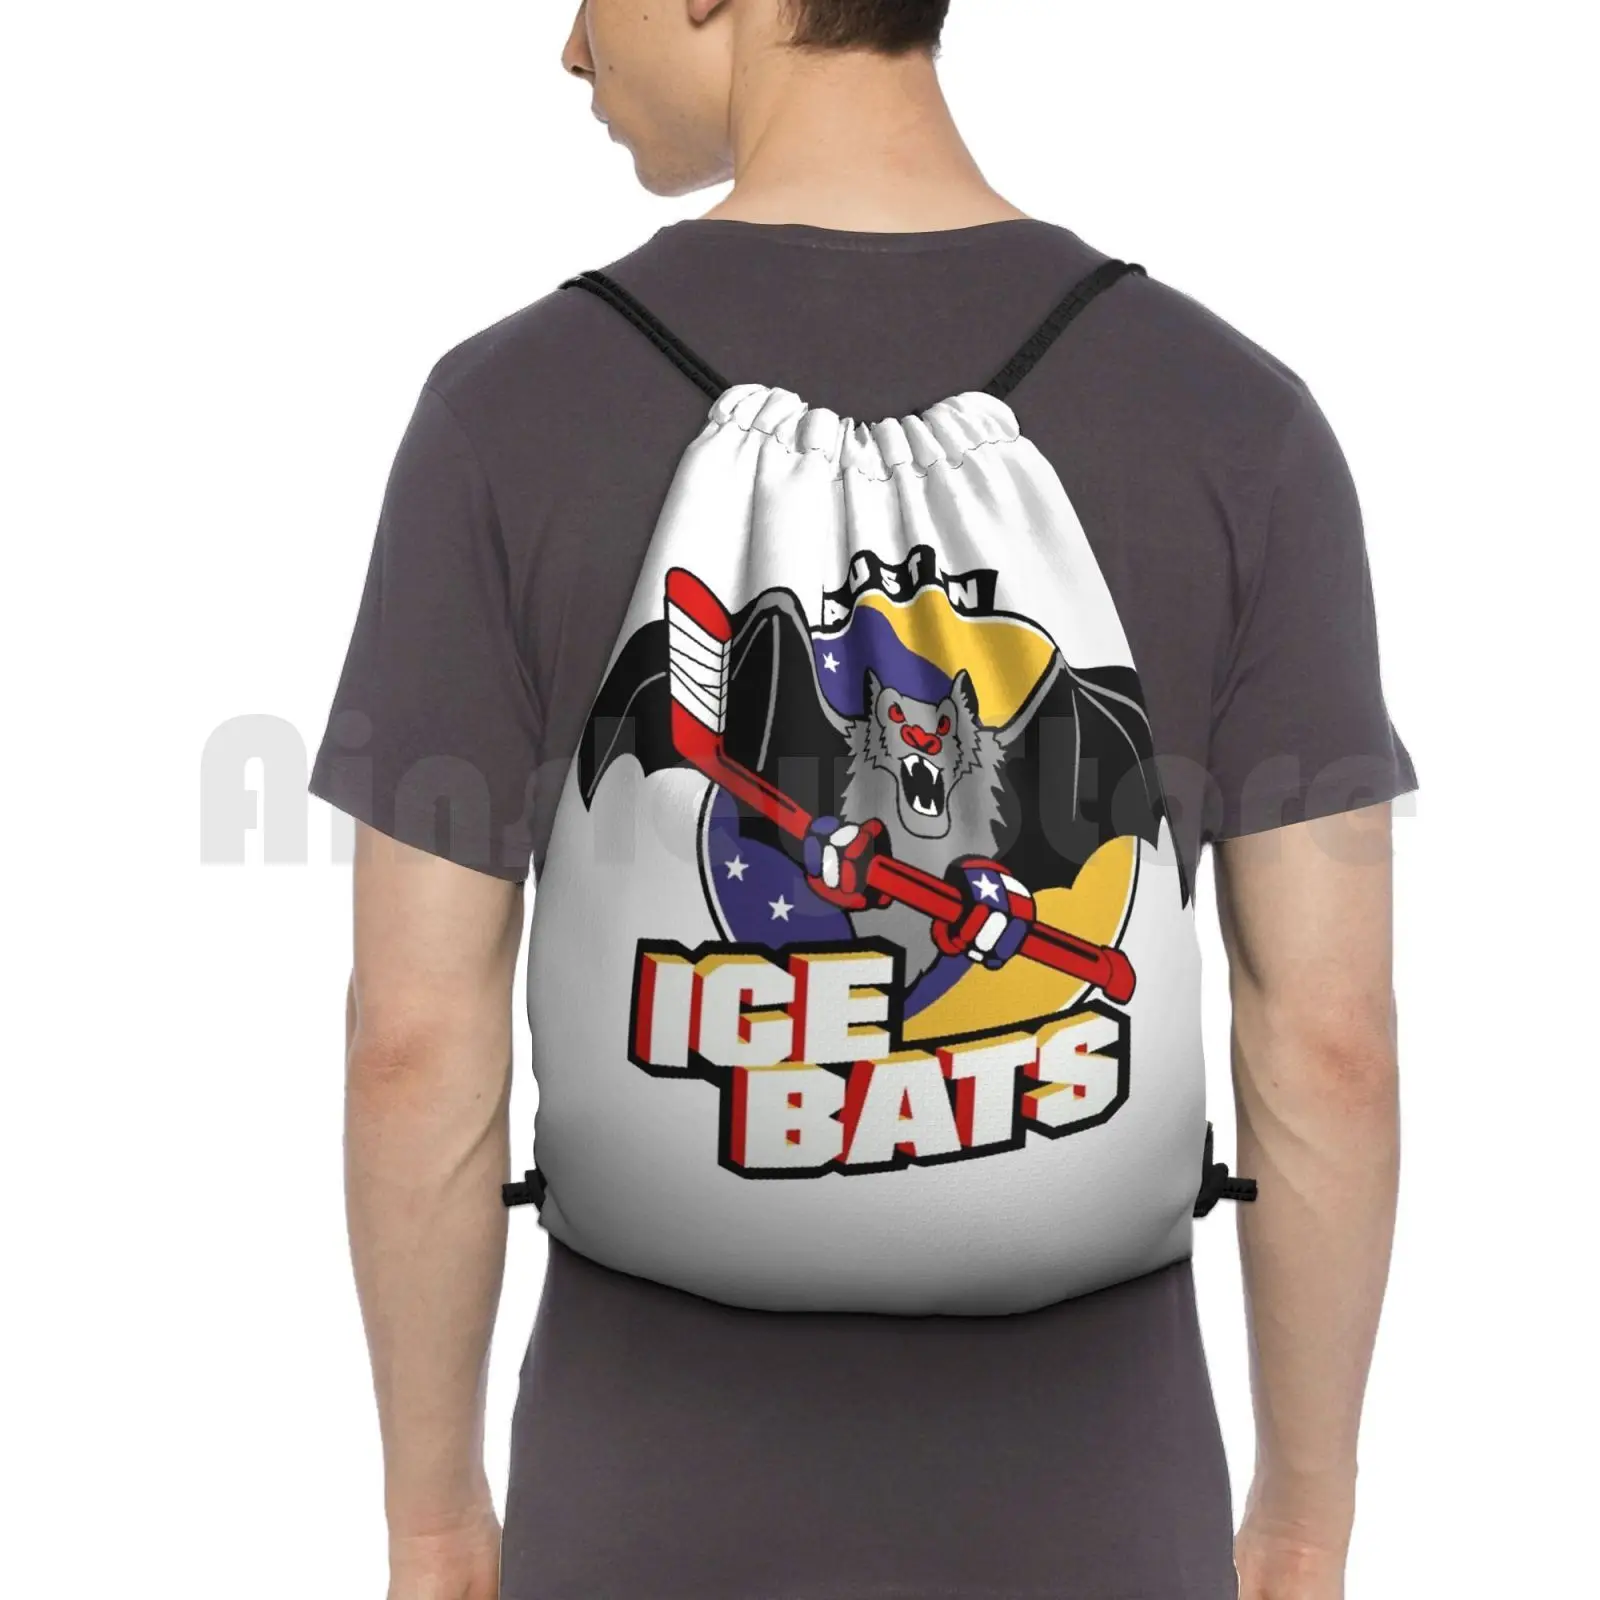 

Austin Ice Bats Vintage Hockey Logo Backpack Drawstring Bag Riding Climbing Gym Bag Austin Ice Bats Vintage Hockey Vintage